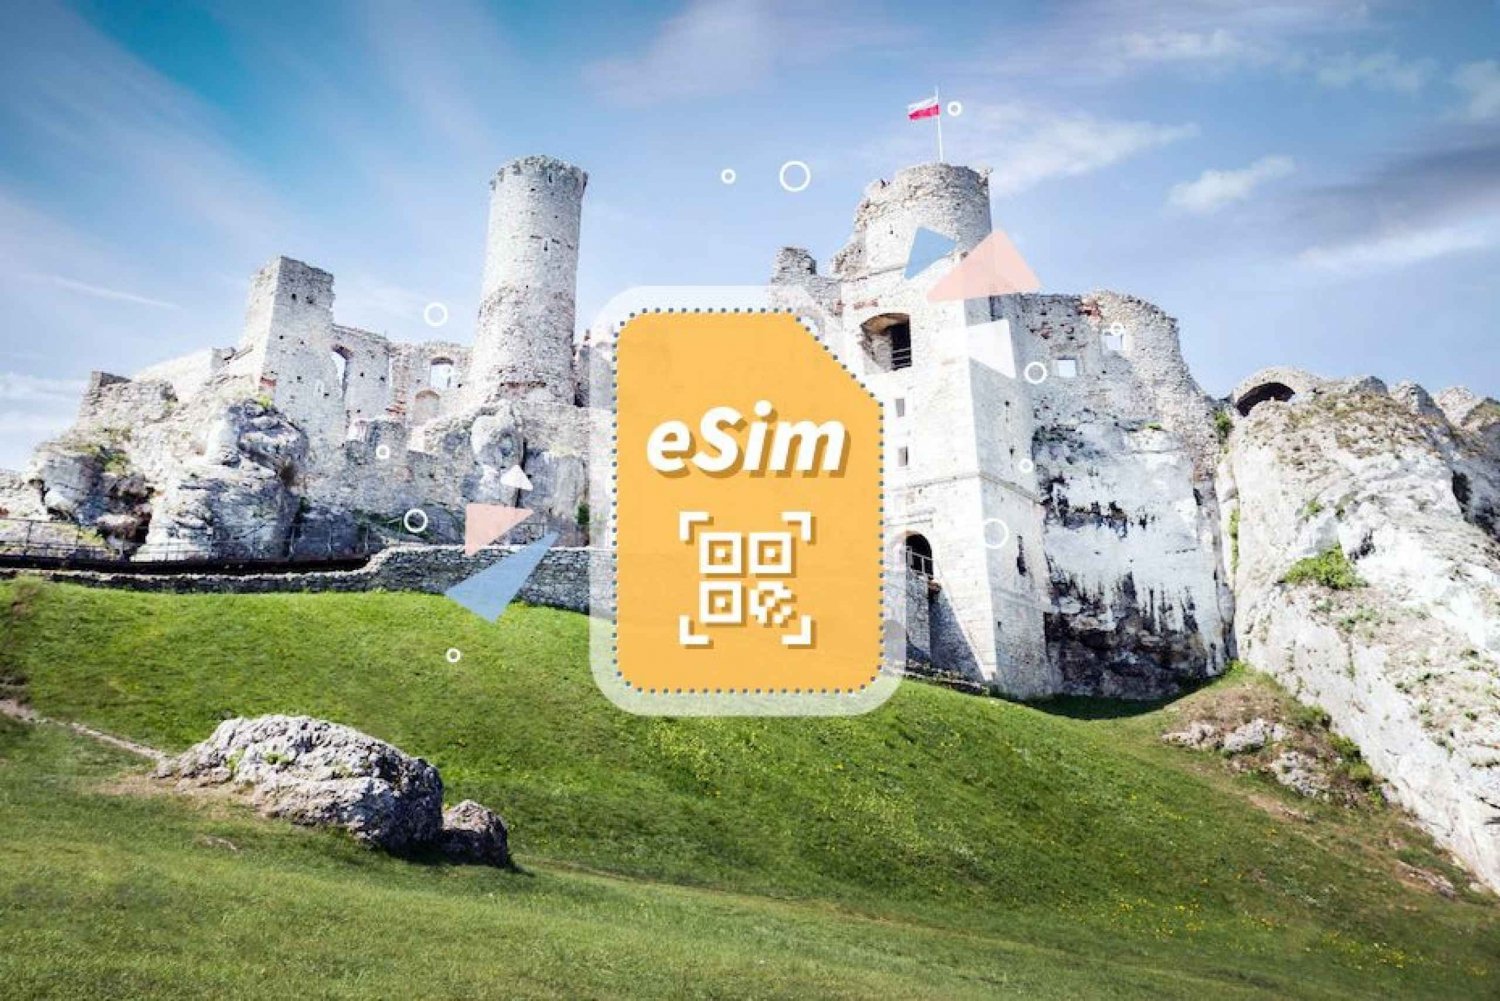 Polen/Europa: 5G eSim Mobile Data Plan